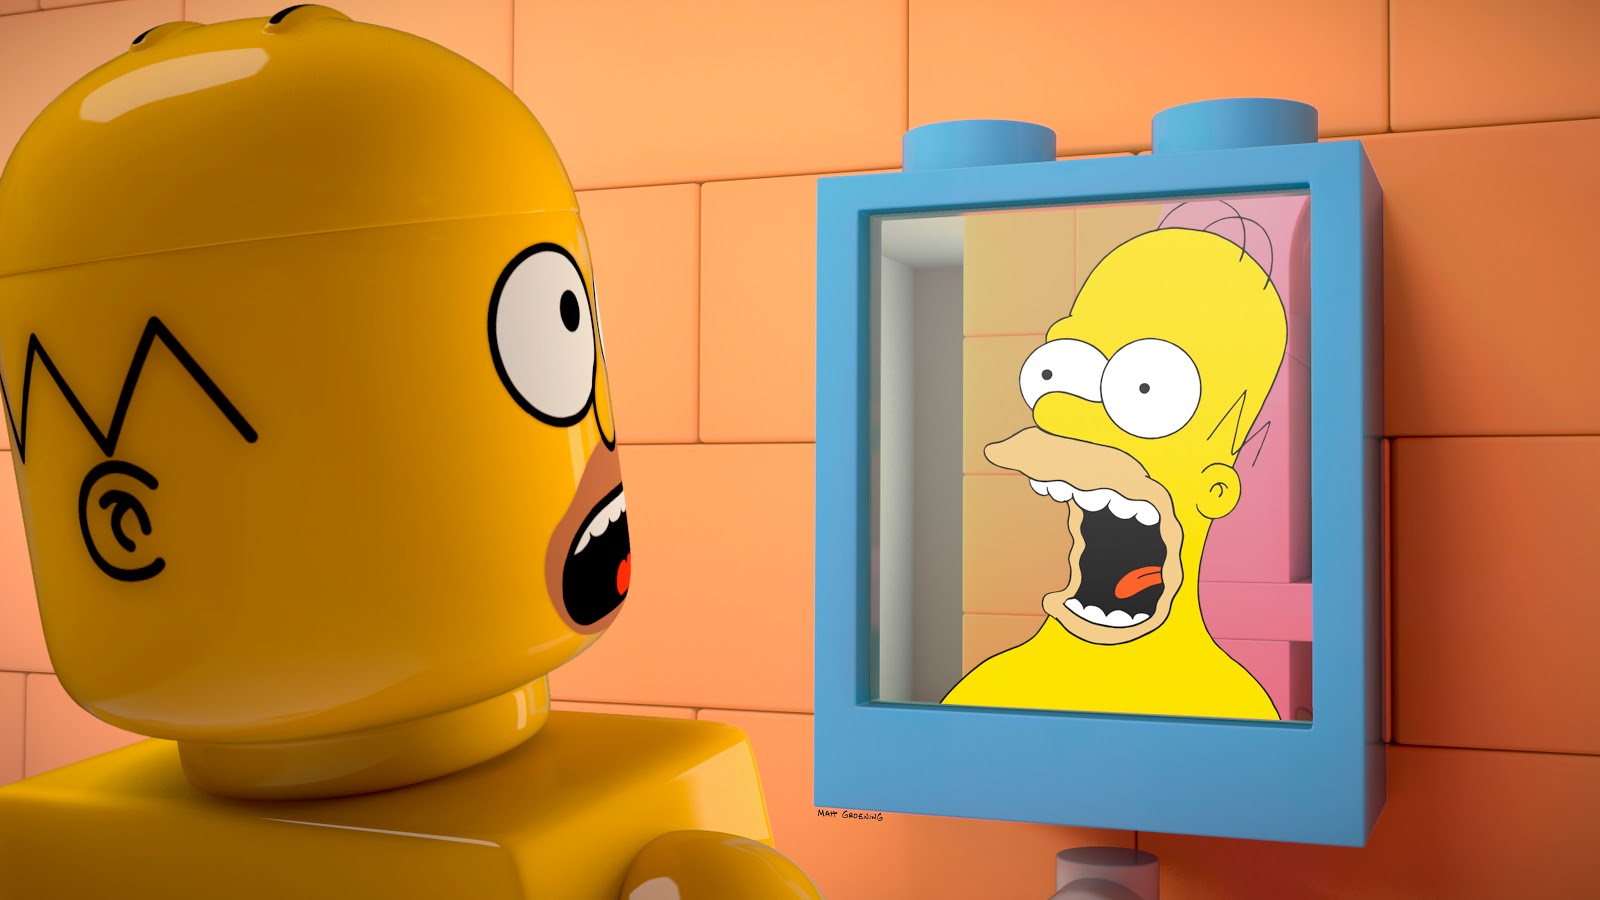 The Simpsons - Episode 25.20 - Brick Like Me (Lego Episode) - Promotional Photos